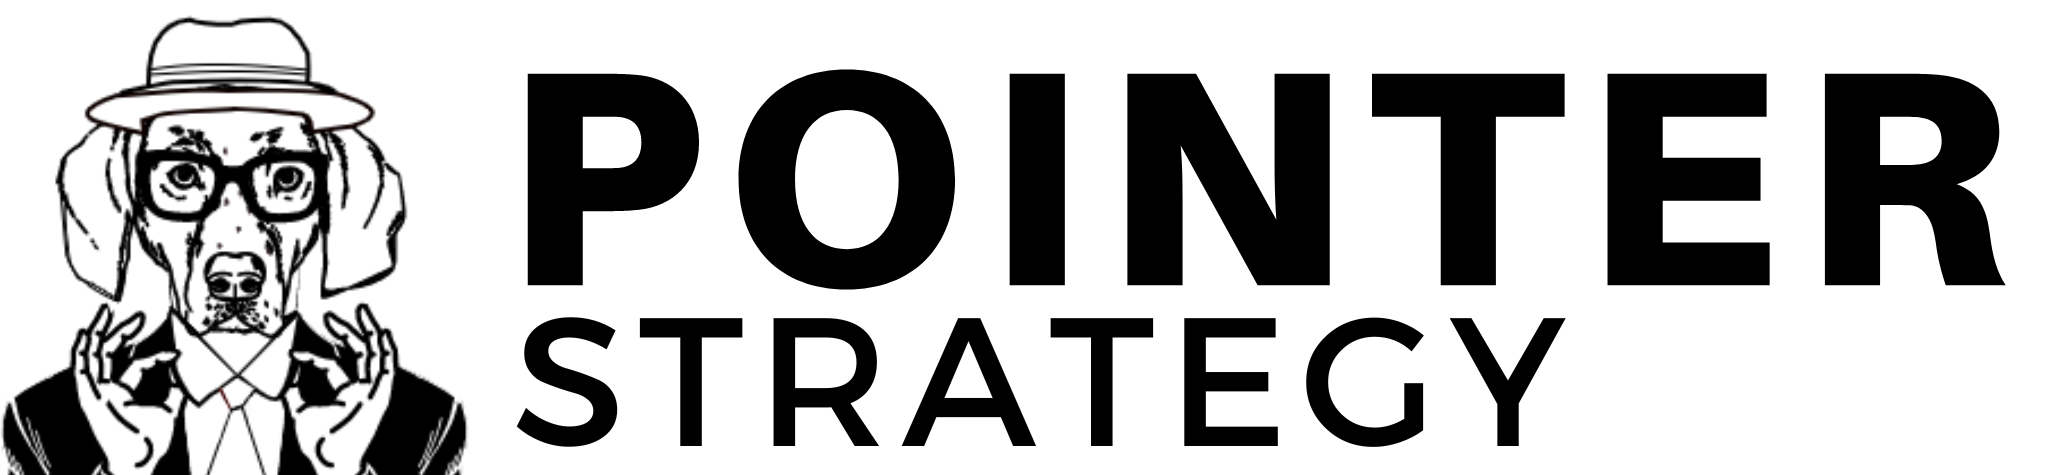 Pointer Strategy logo